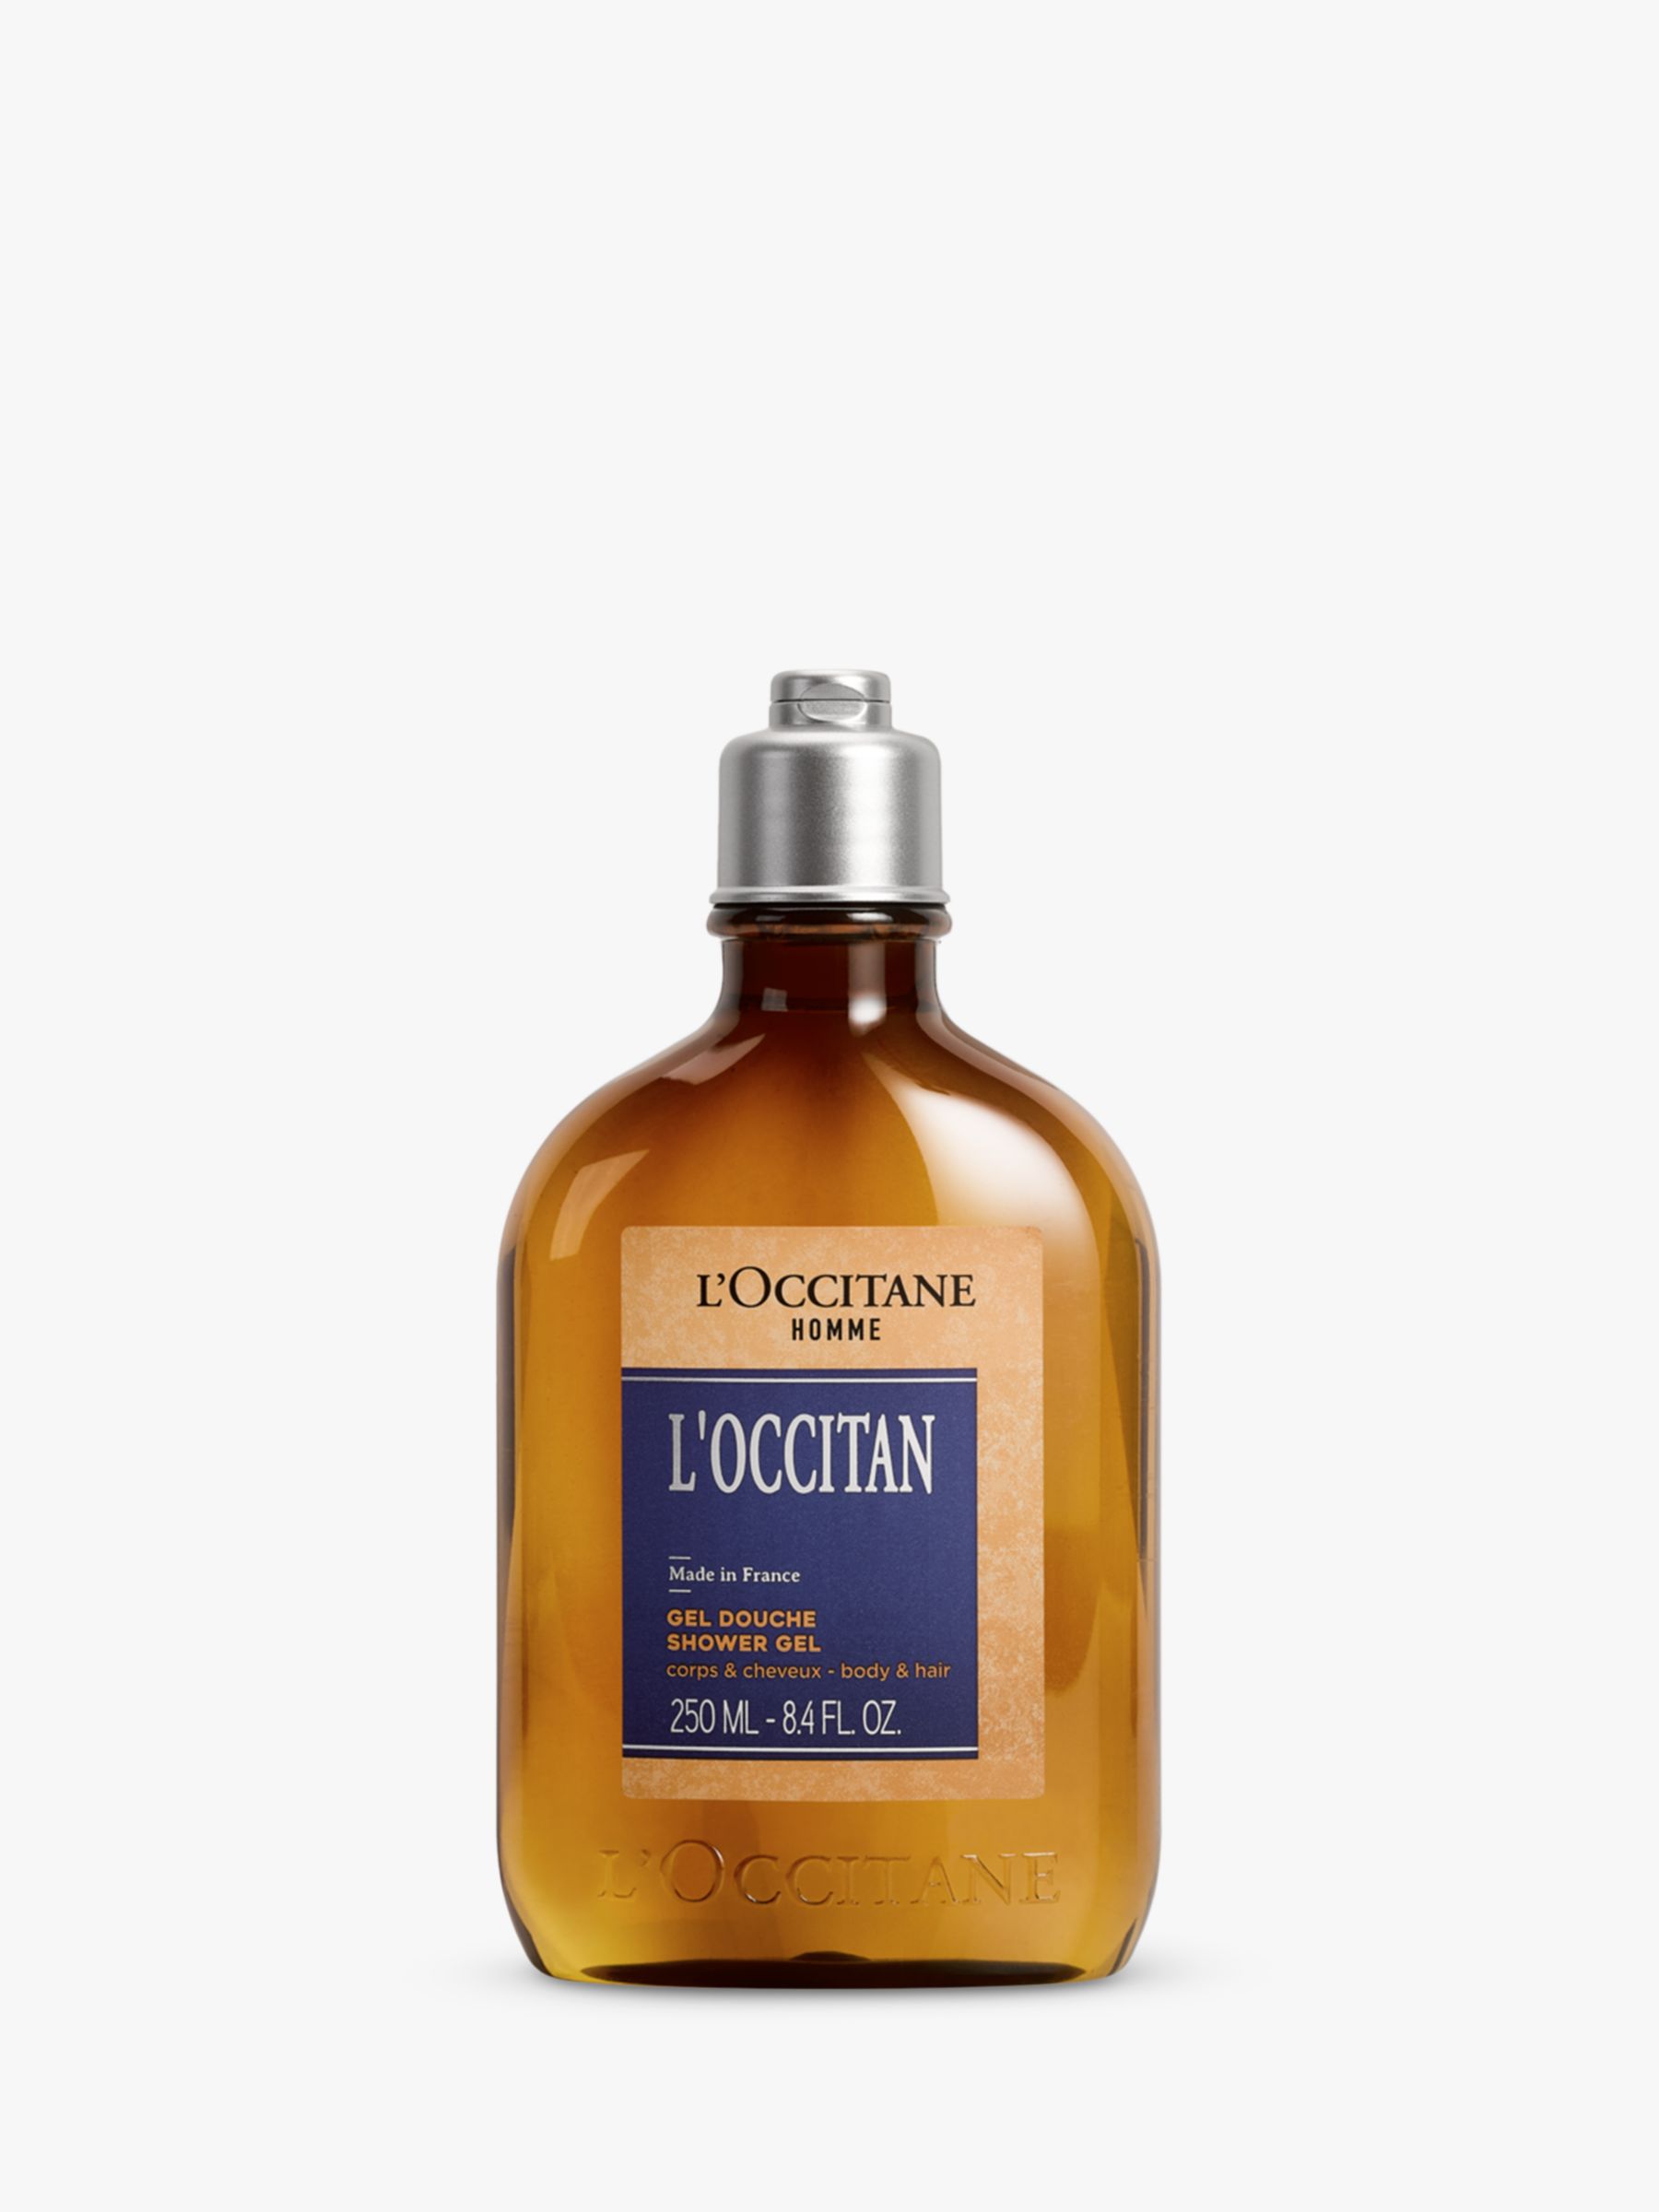 L'OCCITANE Homme L'Occitan Hair & Body Shower Gel, 250ml 1